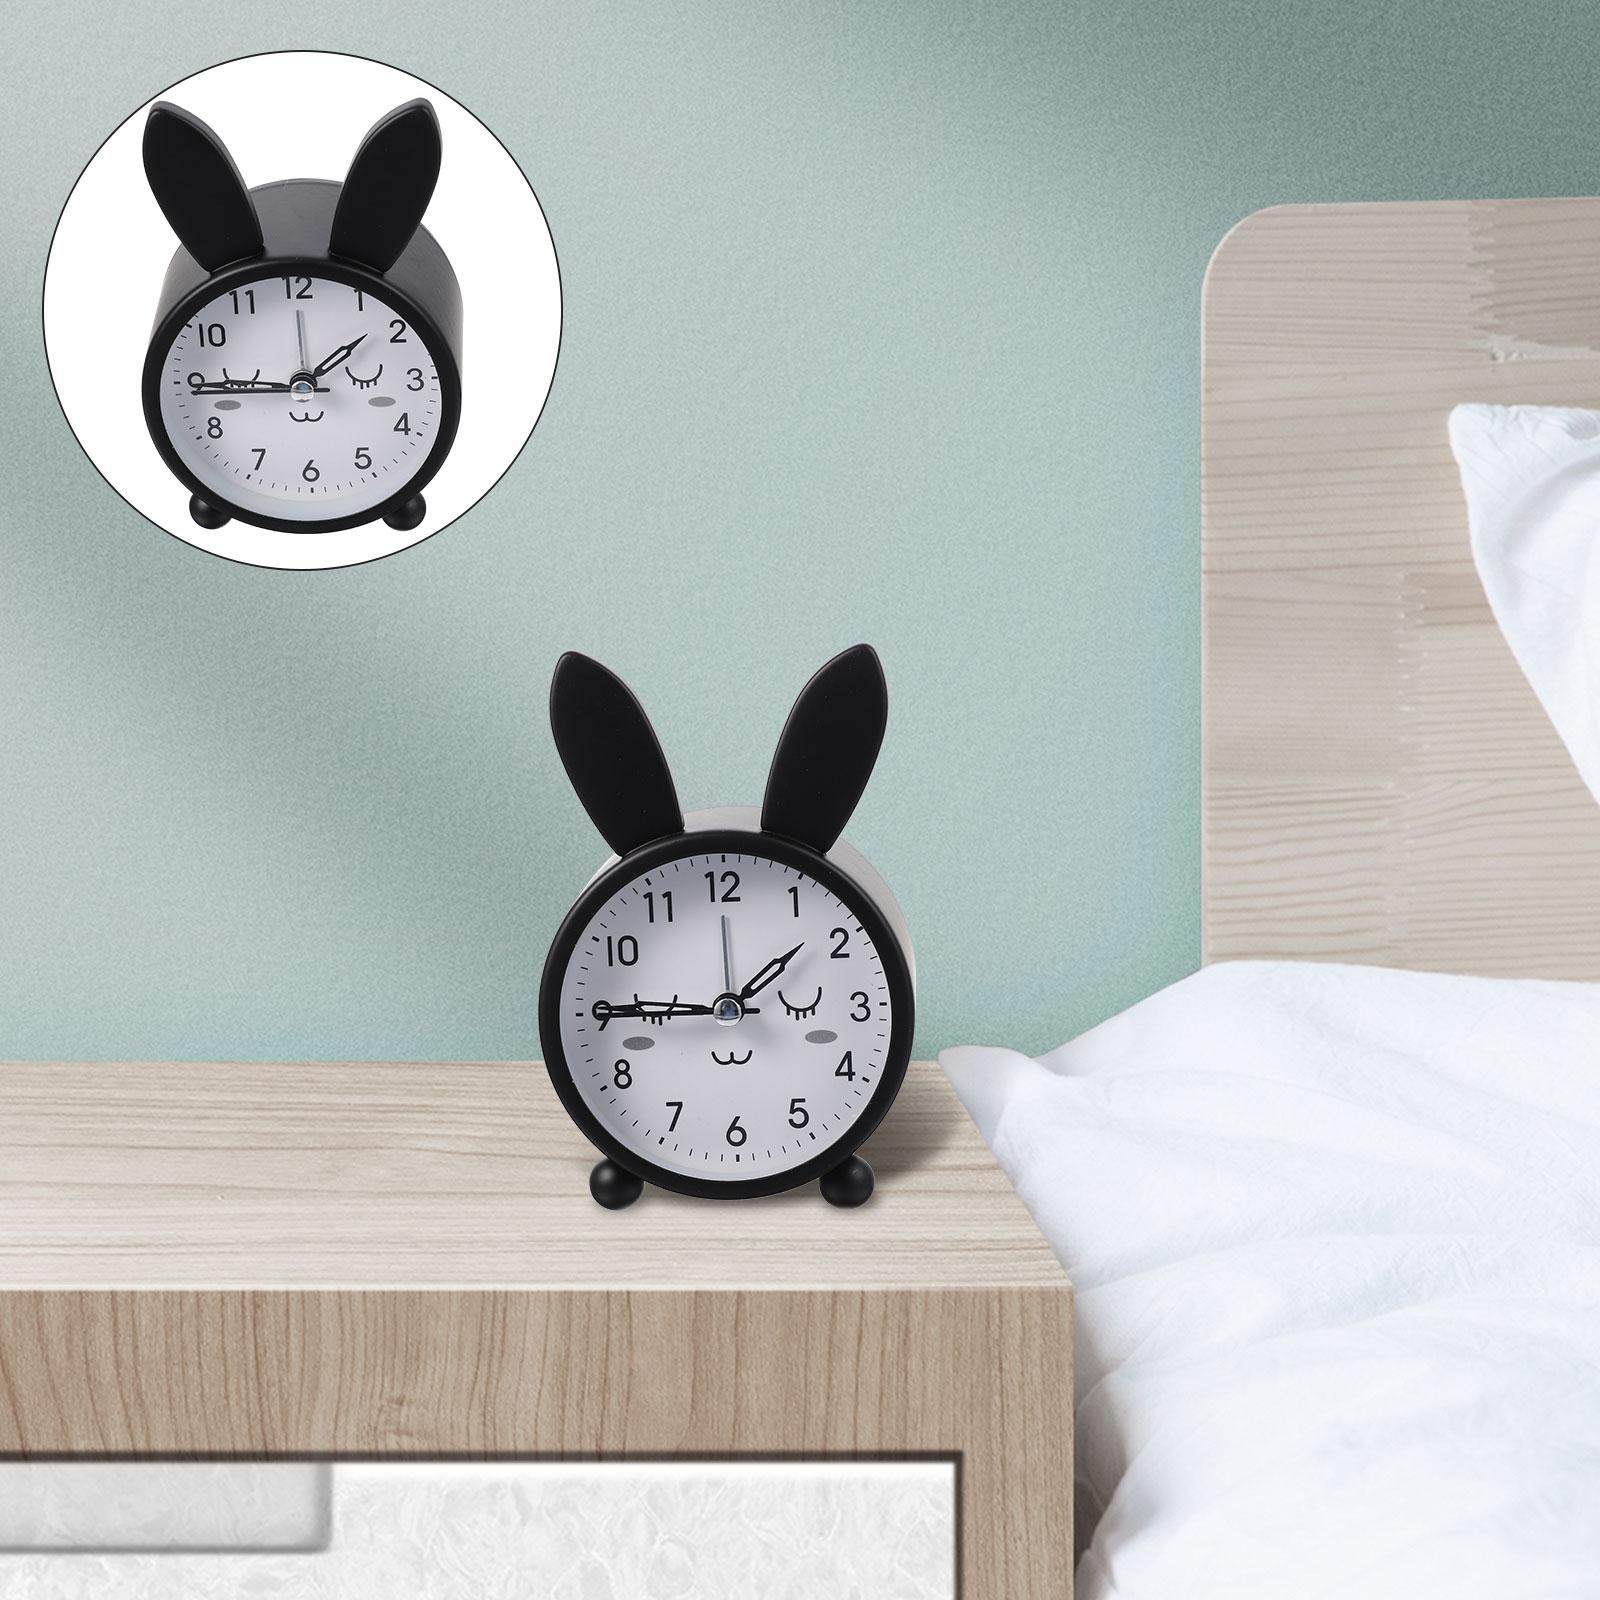 Kids Alarm Clock Zodiac Animal Figures Rabbit Electronic Vintage Car Decor Office Accessories Sleep Travel Child